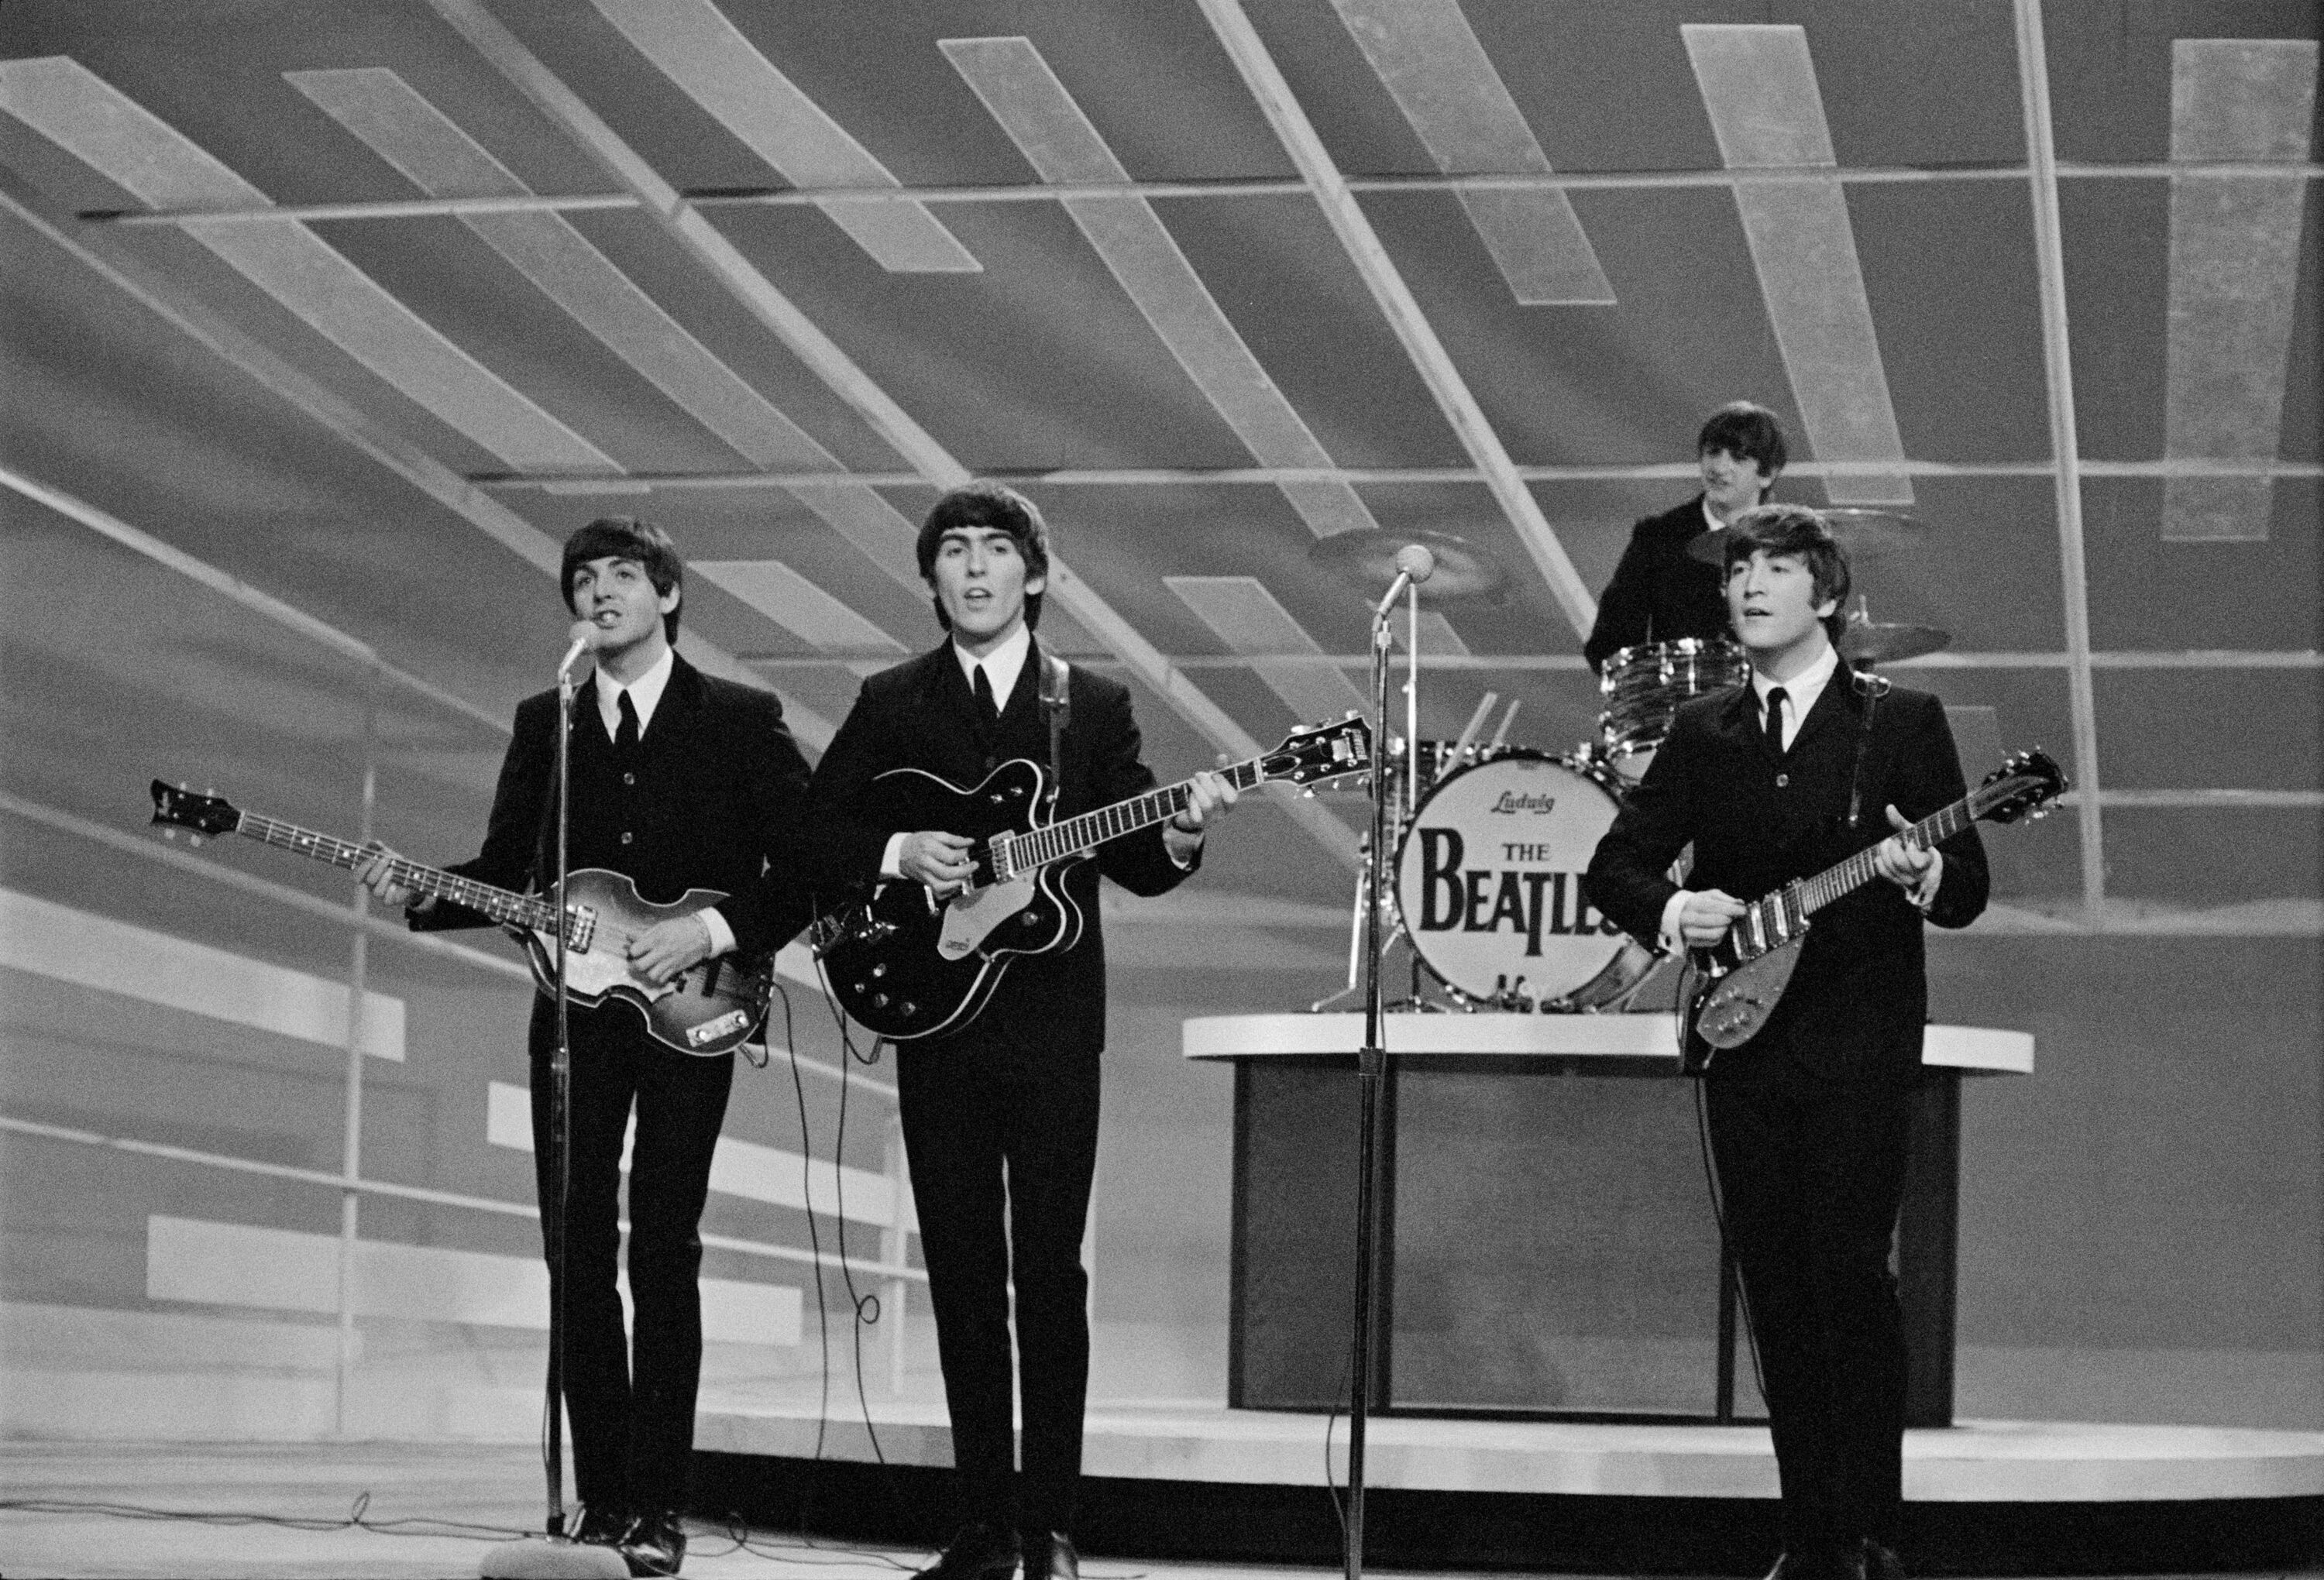 The Beatles 1964. Beatles ed Sullivan show 1964. The Beatles на шоу 1964. Группа the Beatles 1960. Ed show